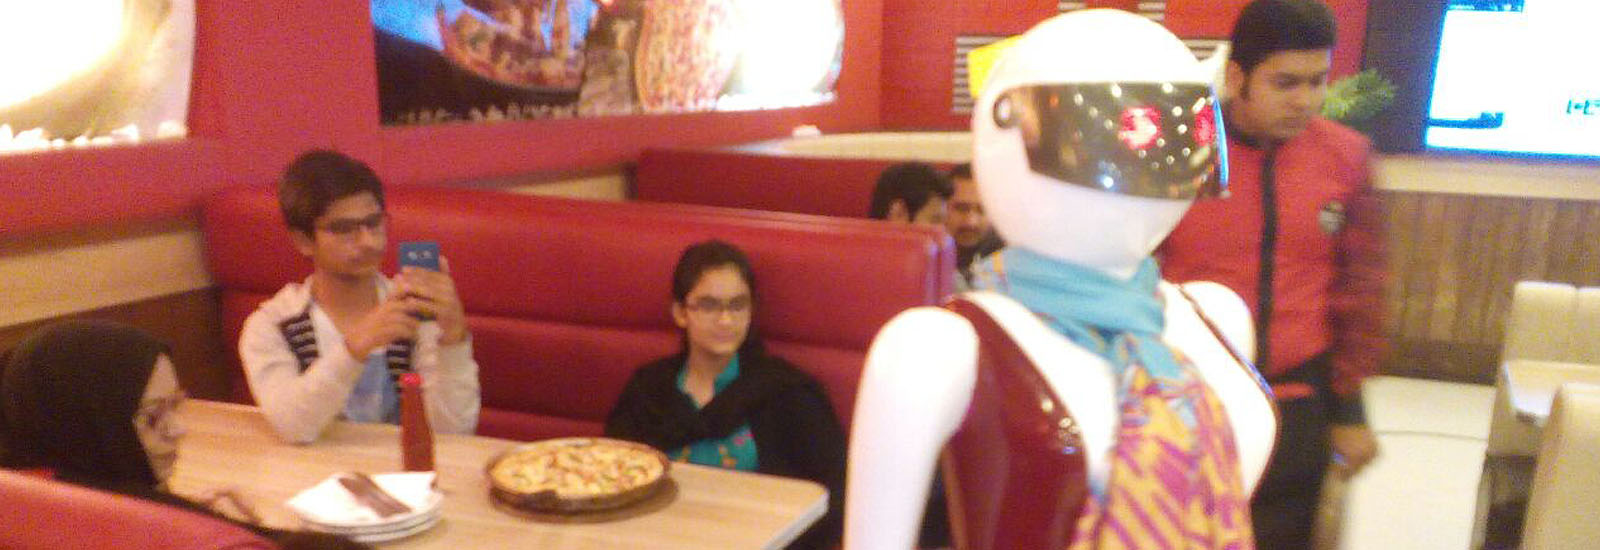 Dreaming big! A fast food restaurant run by robots in Multan